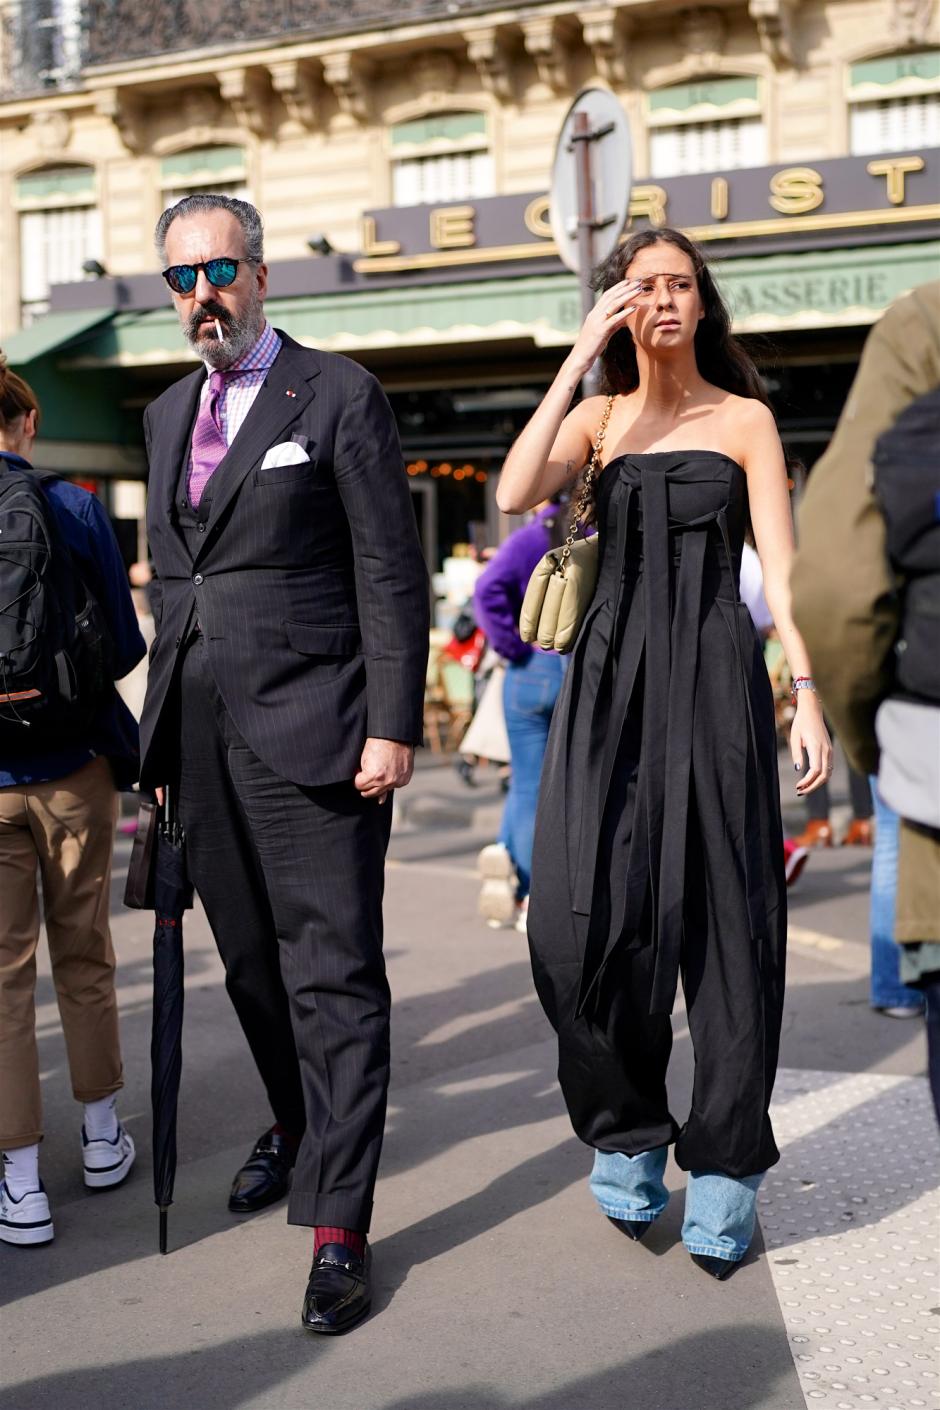 Victoria Federica and Jaime De Marichalar arriving GiambattistaValli event during Paris Fashion Week on September 30, 2022 in Paris, France.